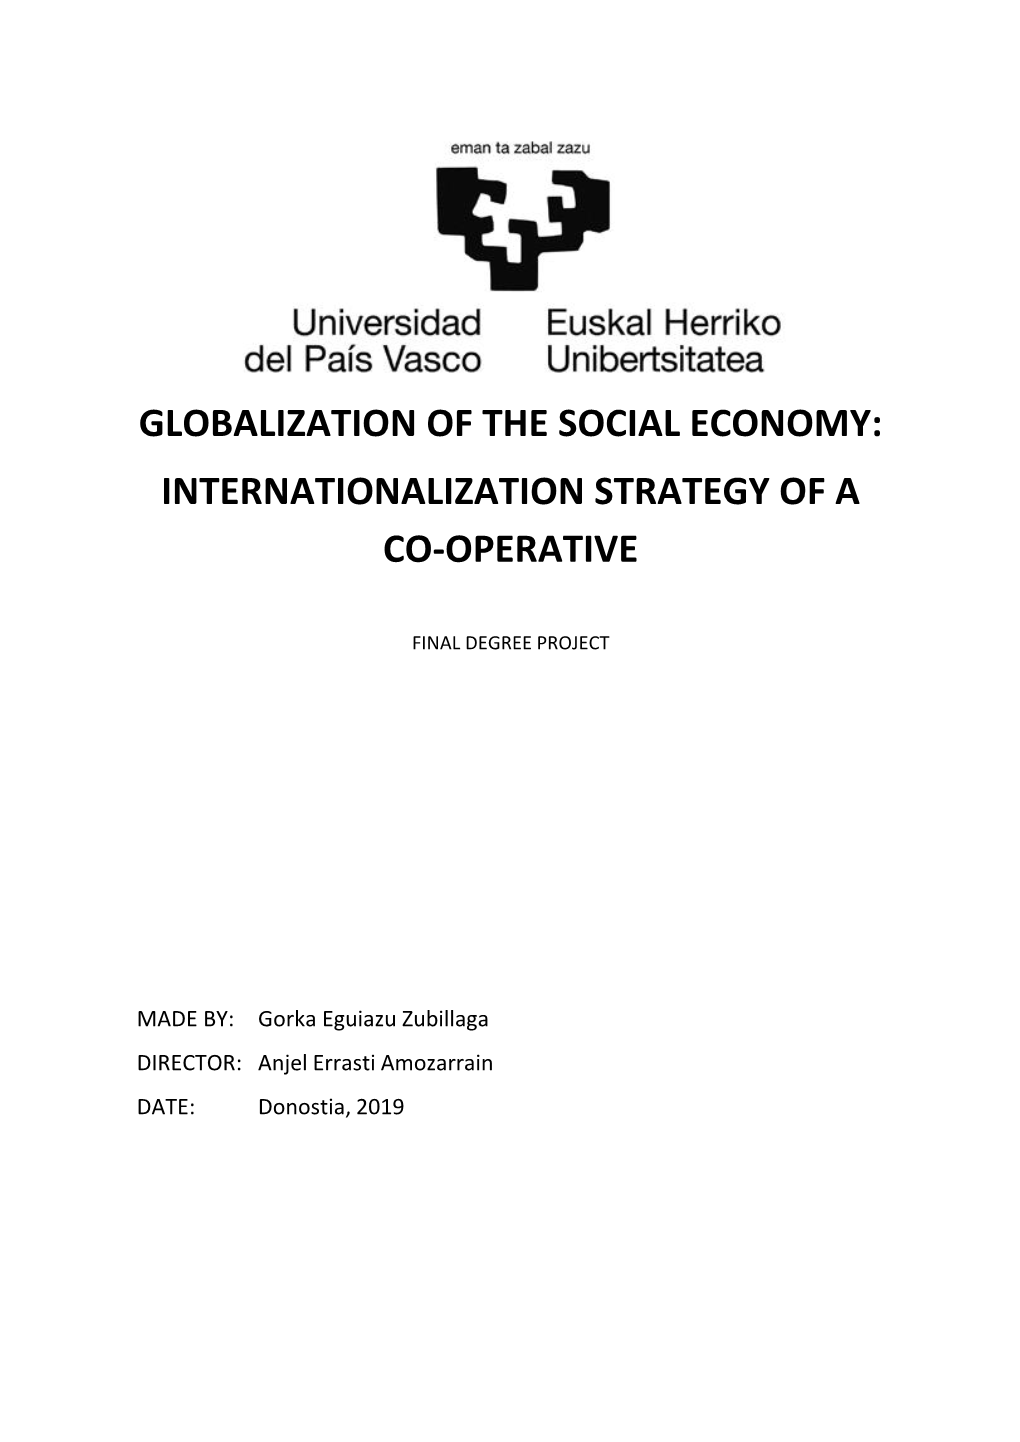 Globalization of the Social Economy: Internationalization Strategy of a Co-Operative